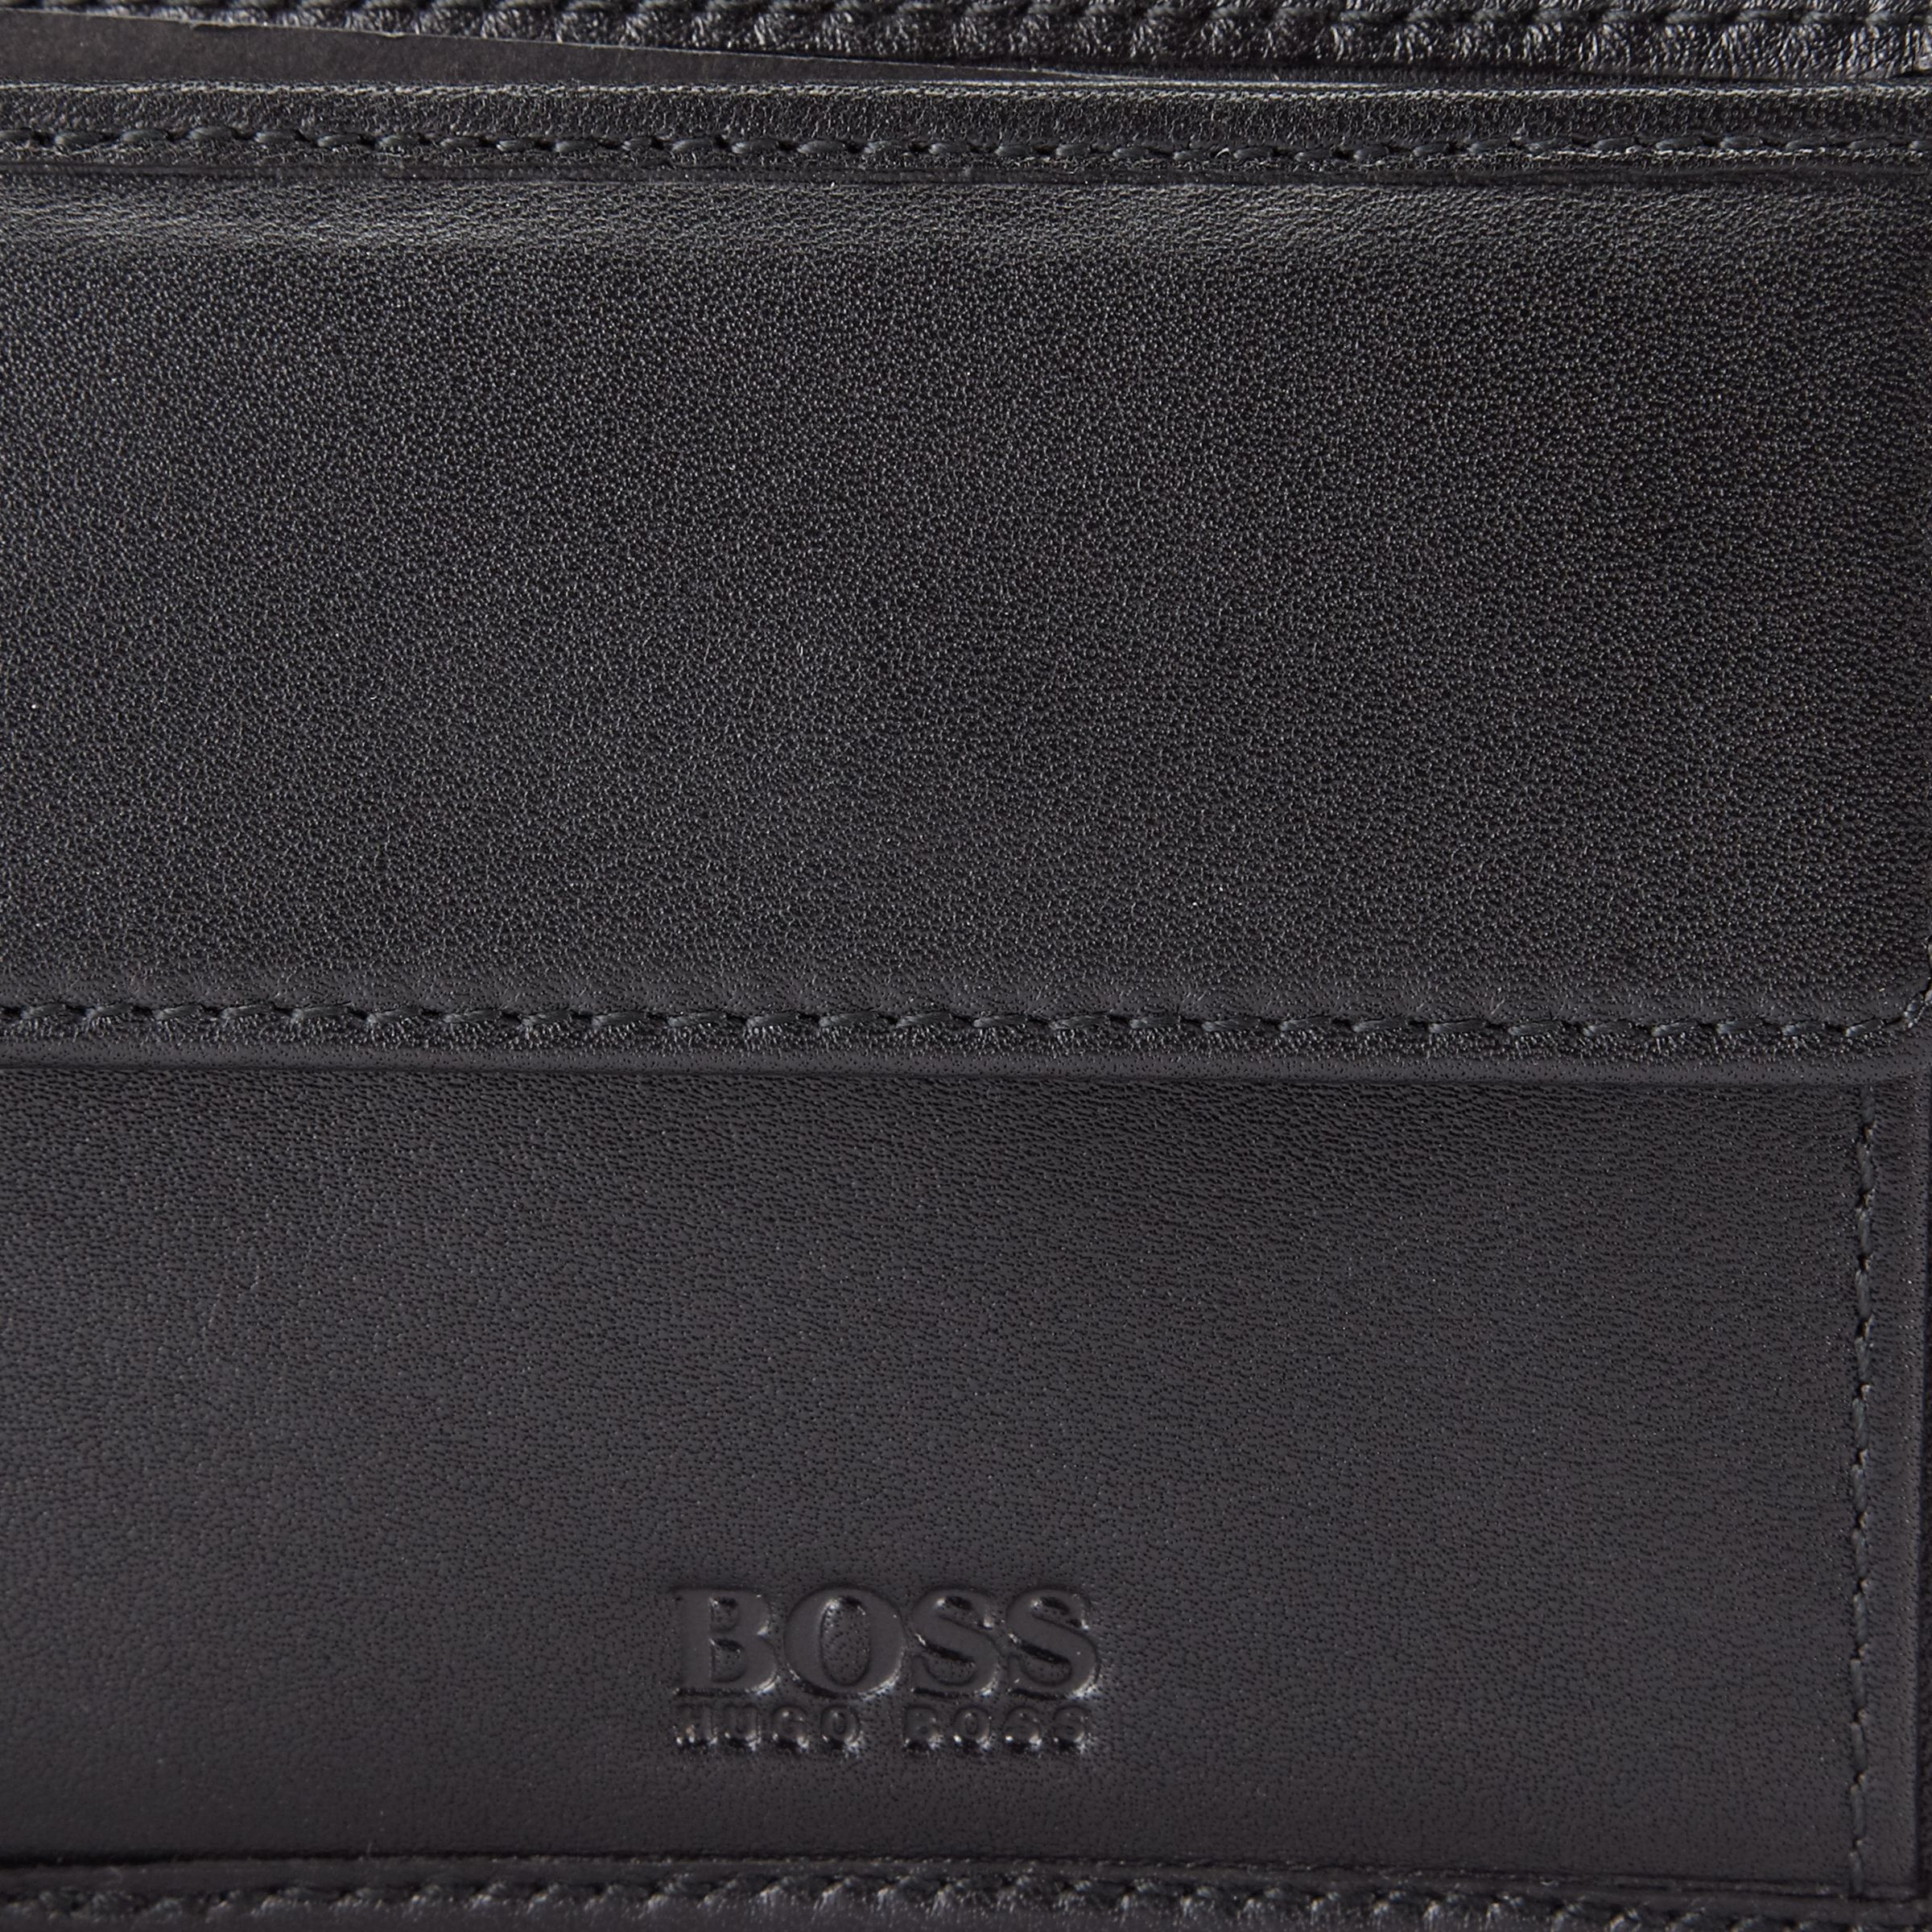 BOSS Asolo Bi-fold Leather Wallet, Black at John Lewis & Partners